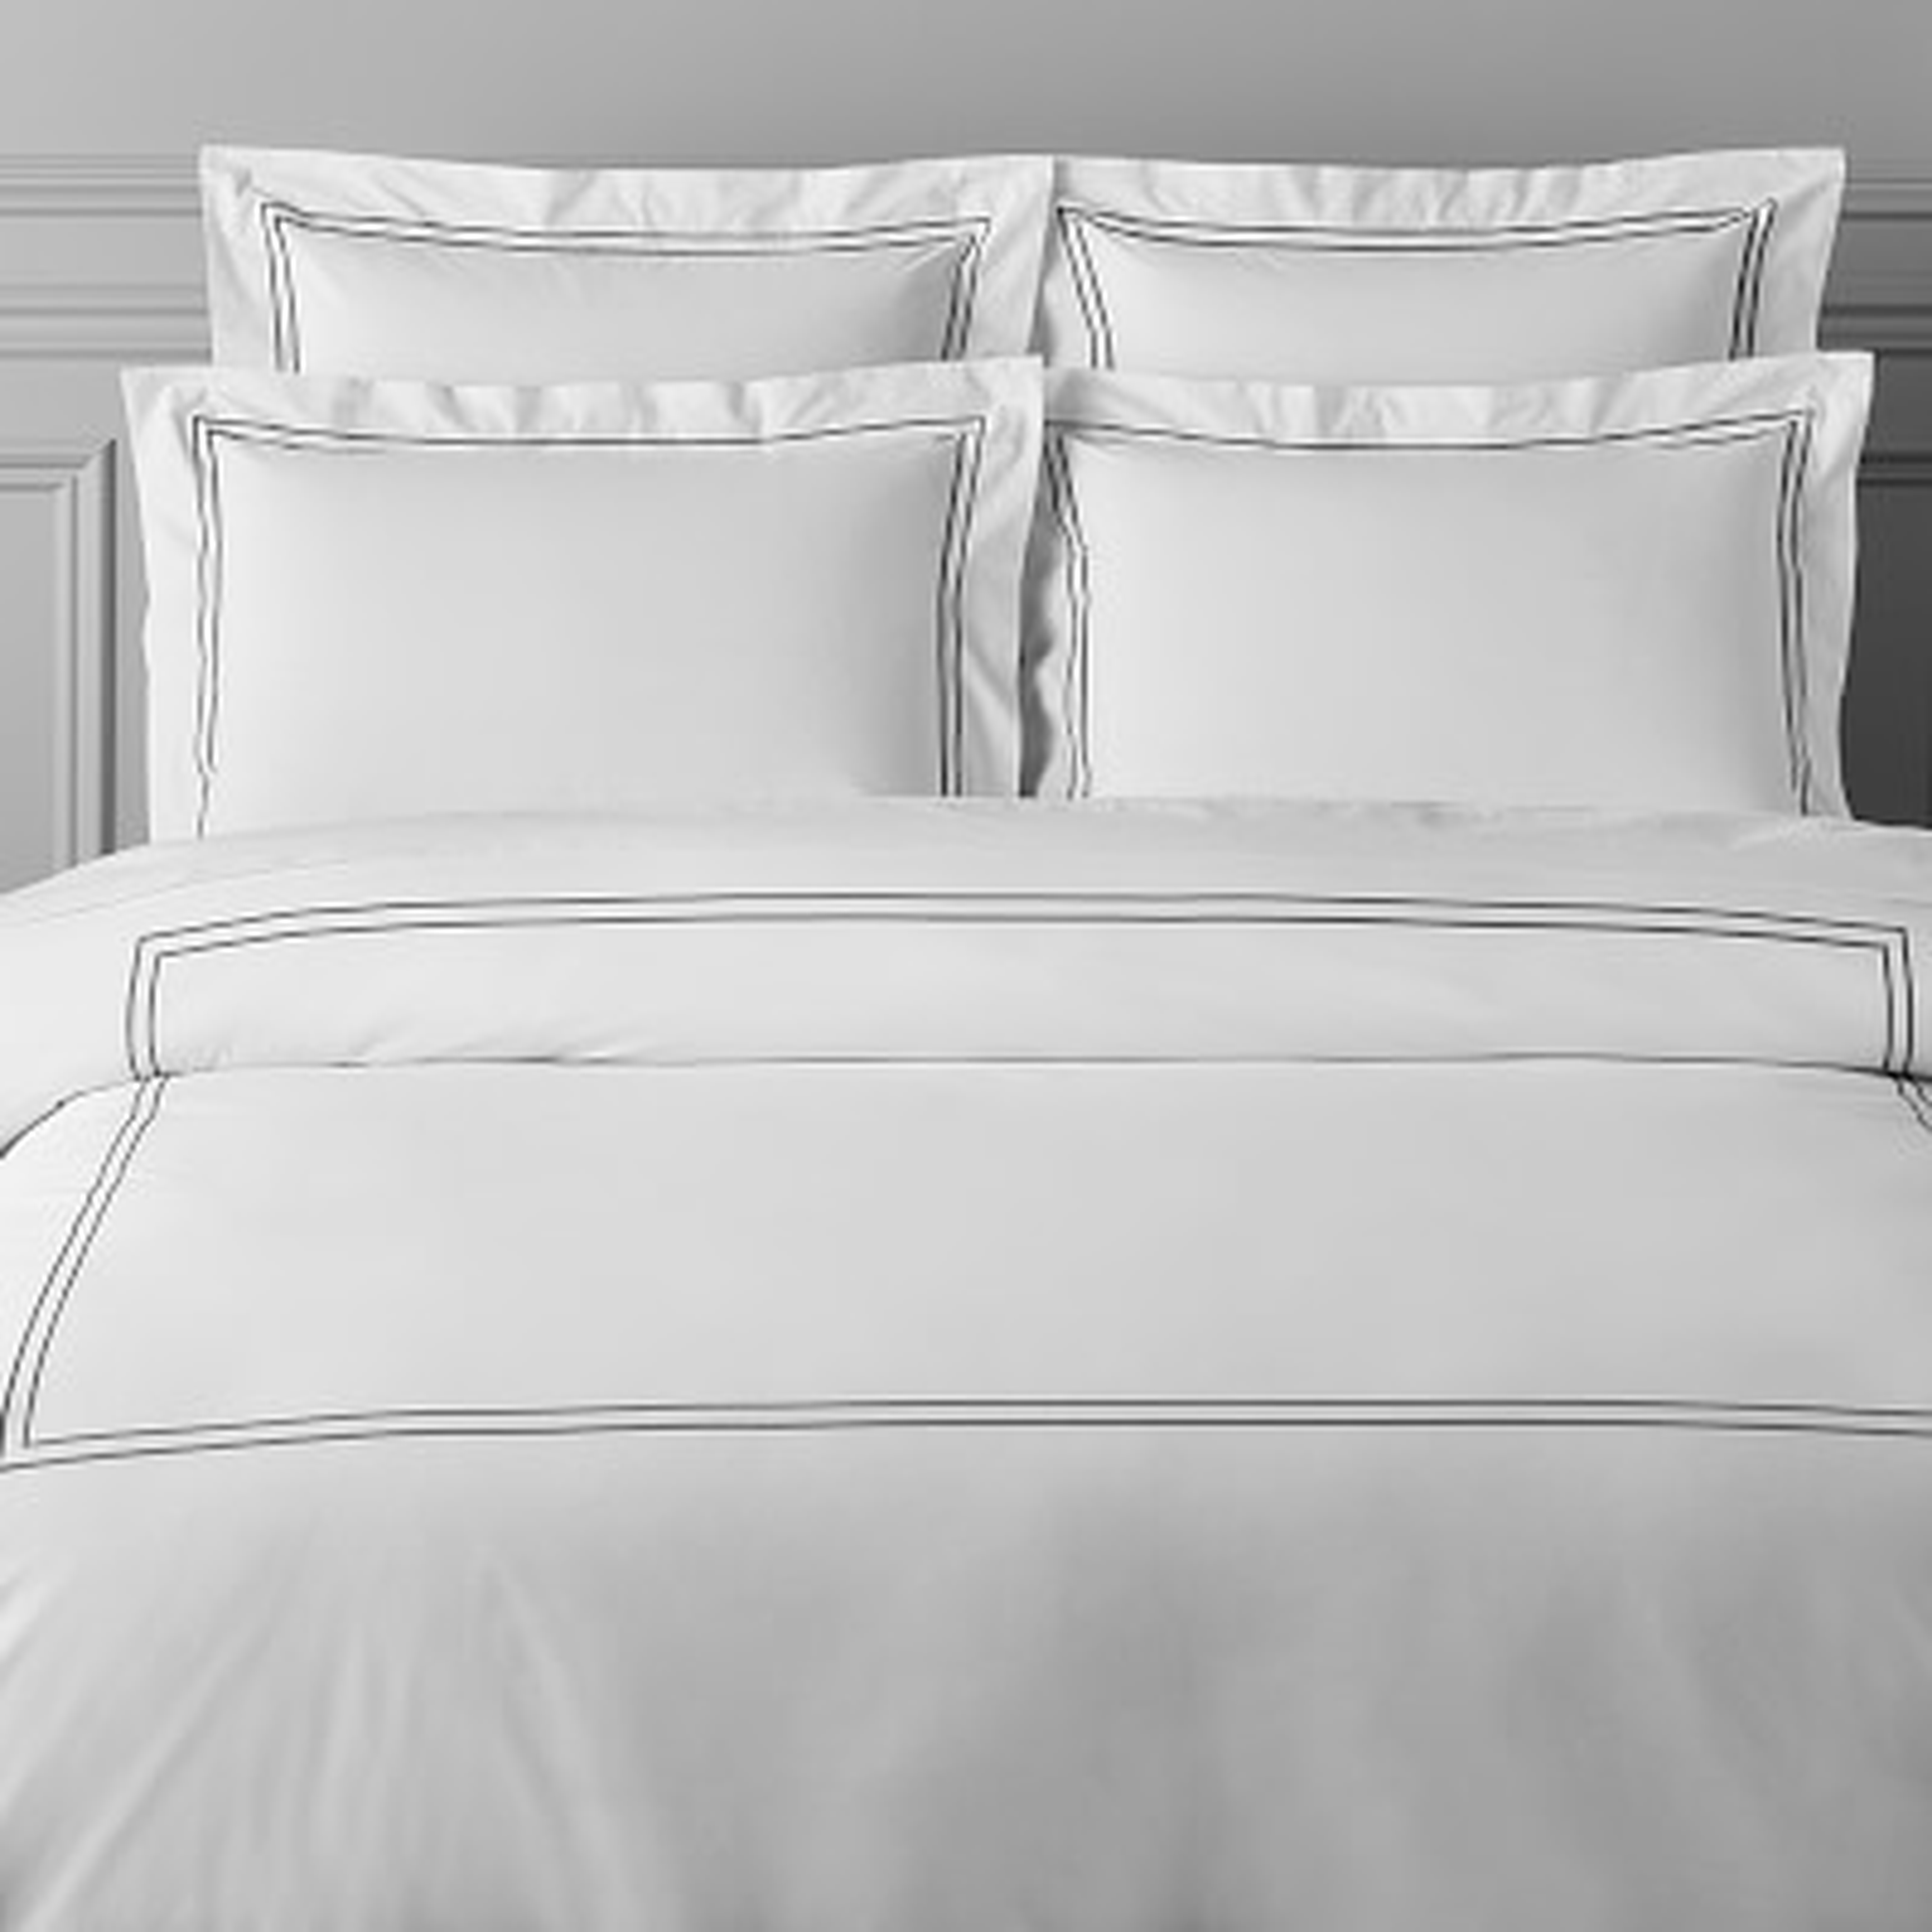 White Hotel Bedding, Sham, Each, Two-Line, King, Black - Williams Sonoma